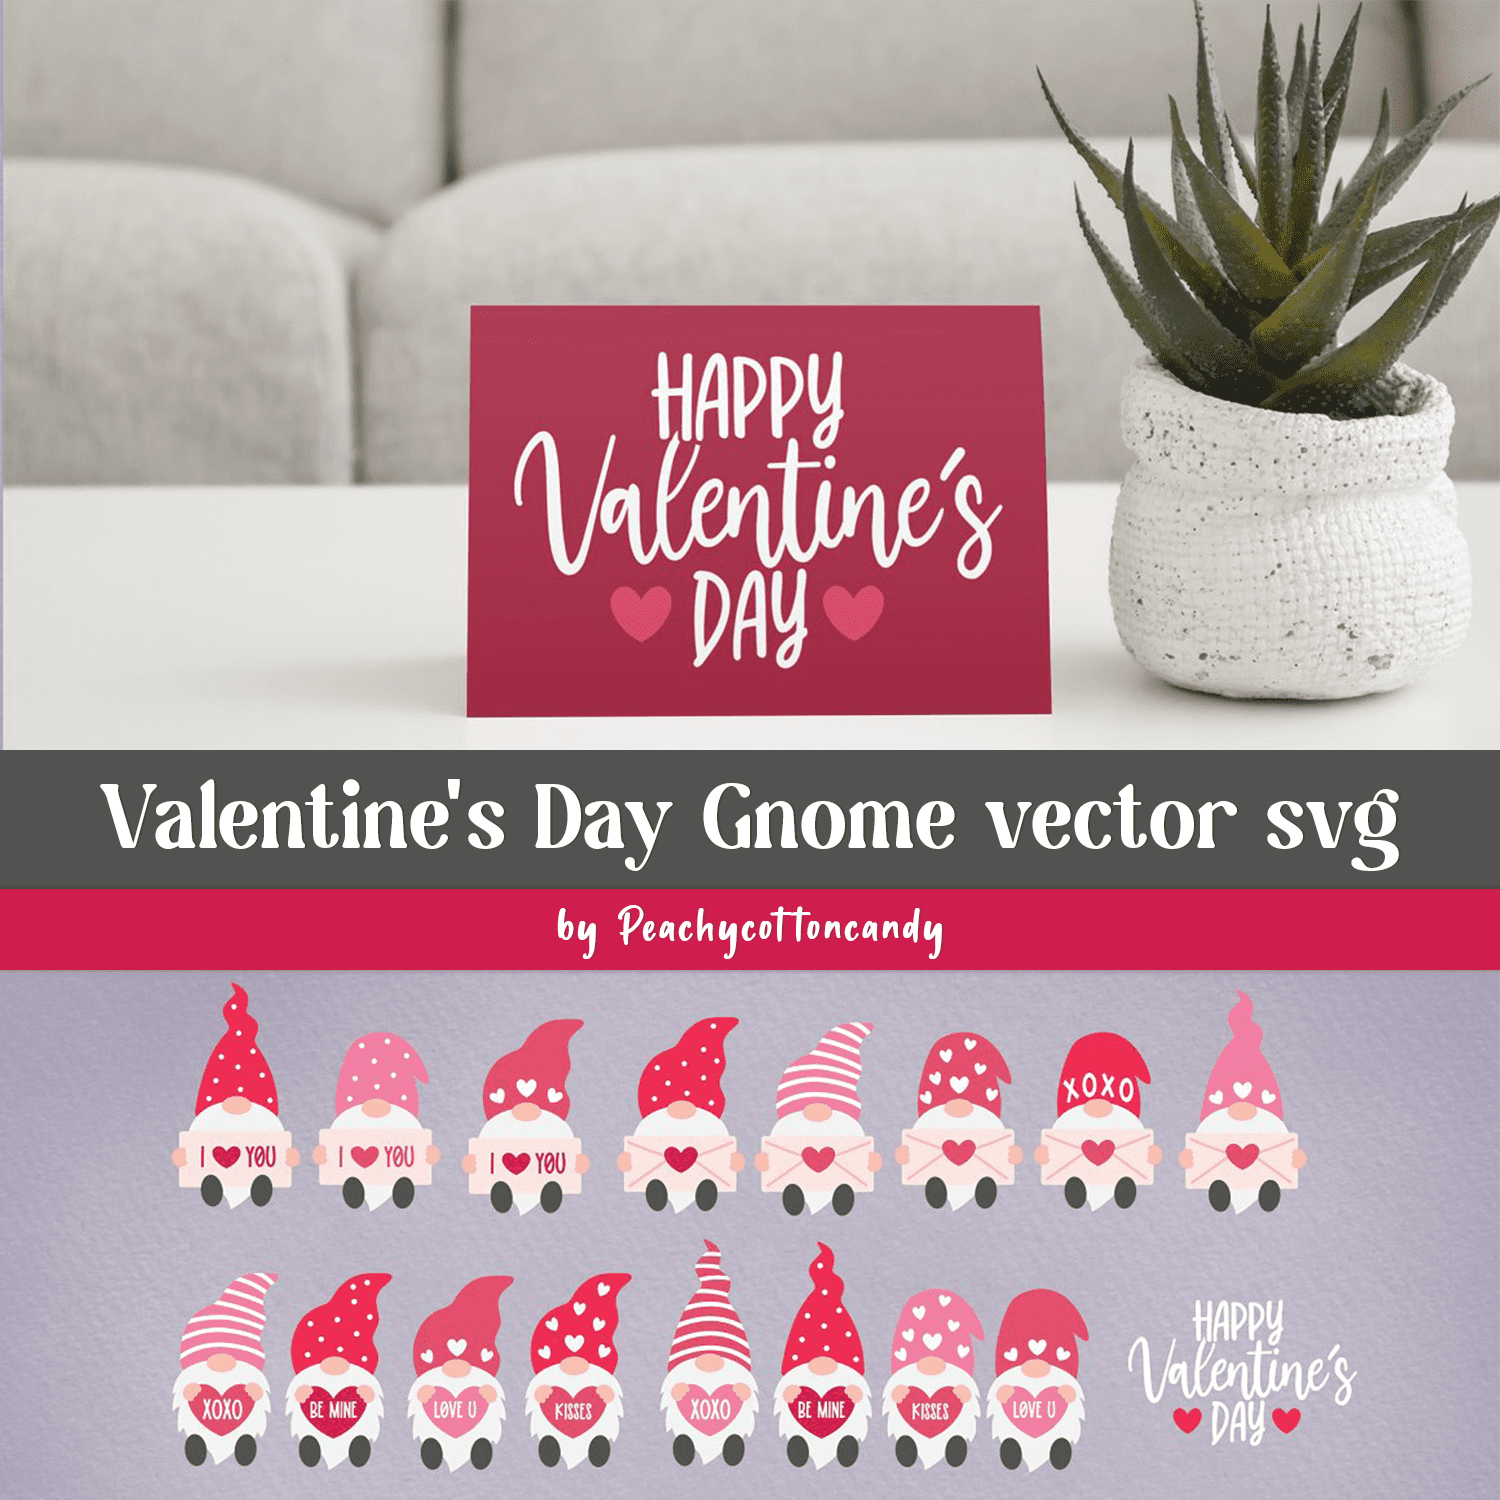 Valentine's Day Gnome Vector Svg Cover.